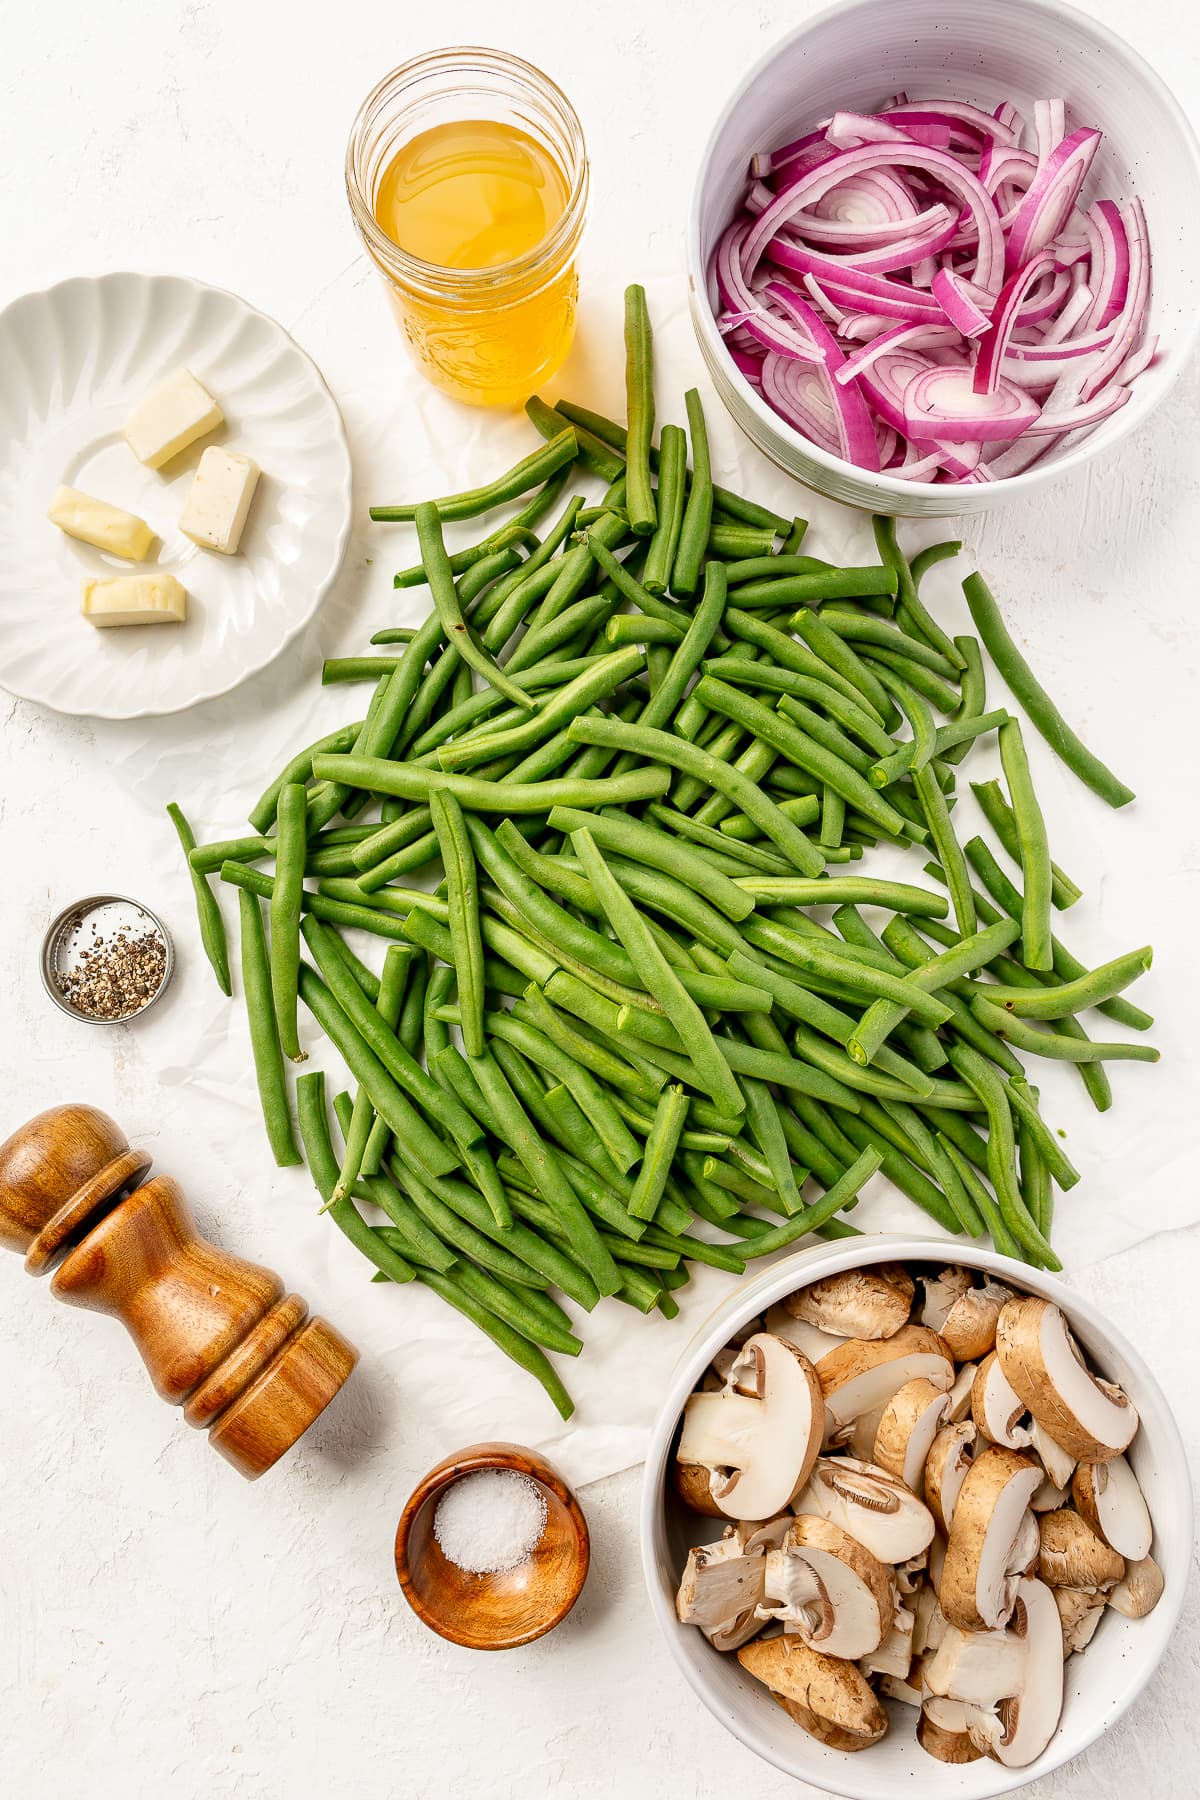 Green Beans and Mushroom ingredients